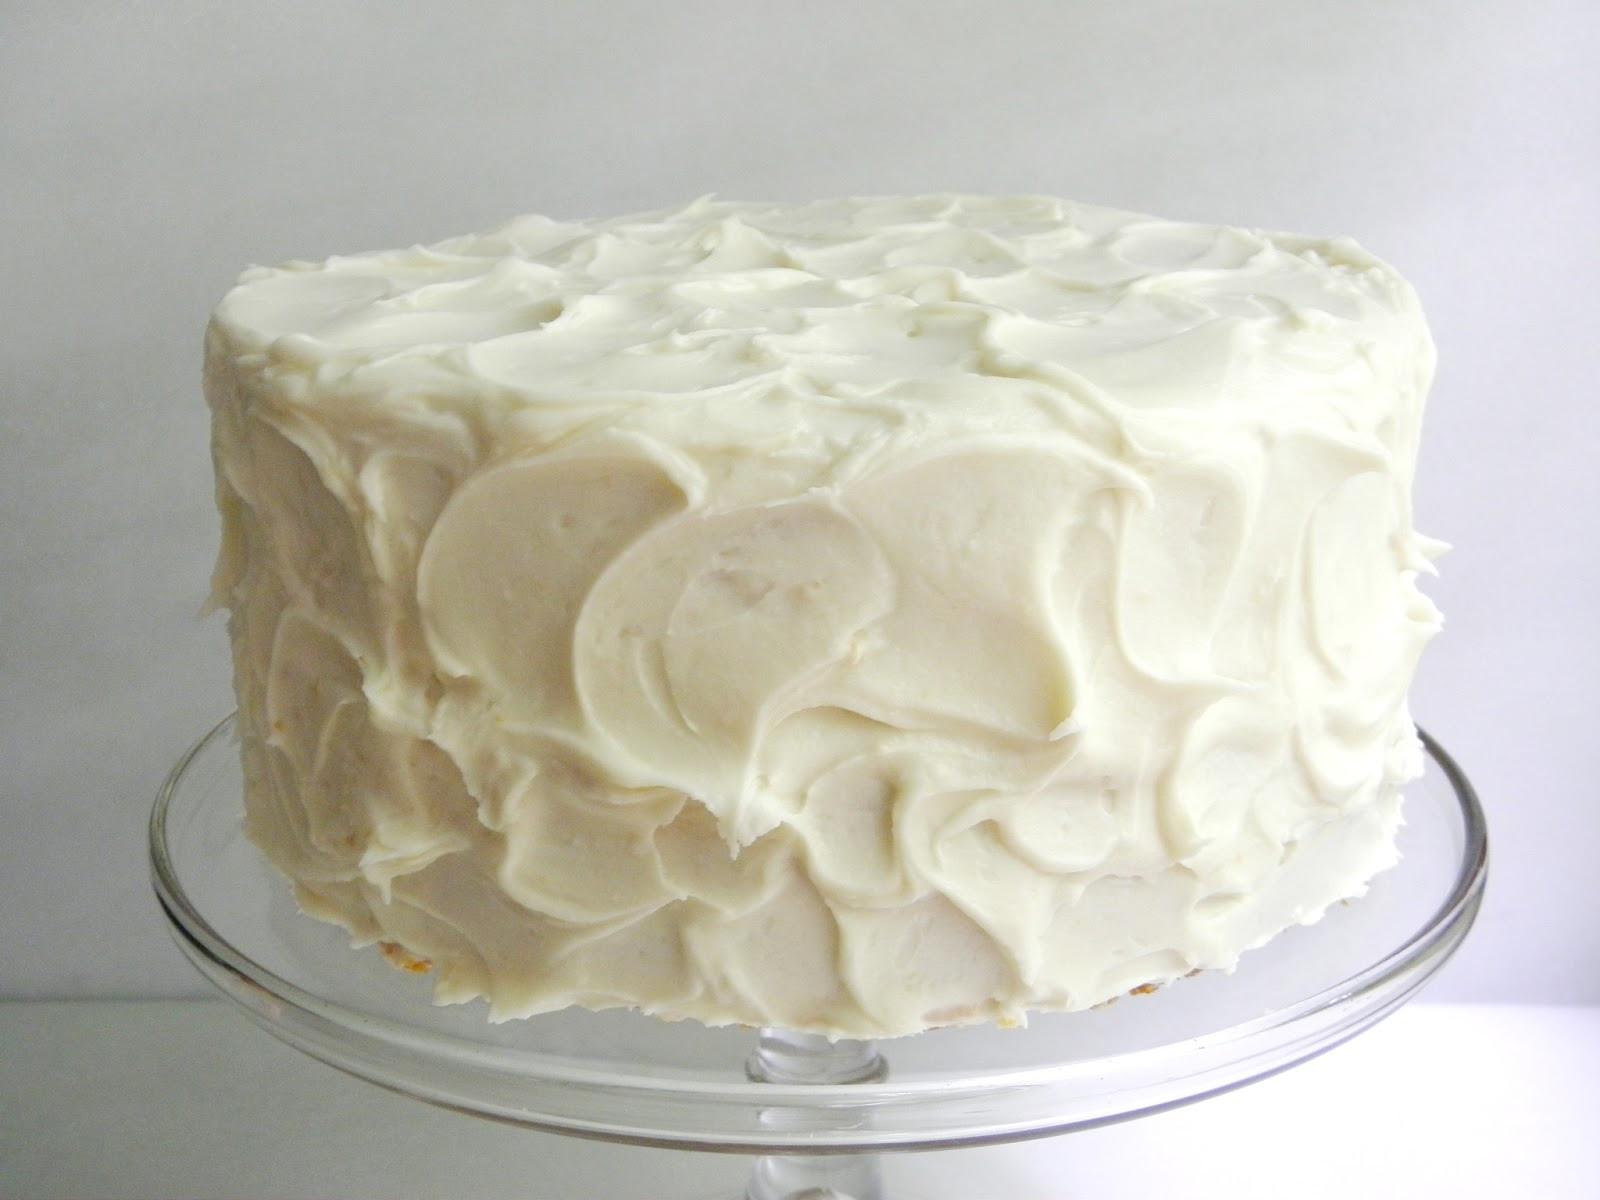 Best ideas about Vanilla Birthday Cake
. Save or Pin Good Things by David Vanilla Birthday Cake Now.